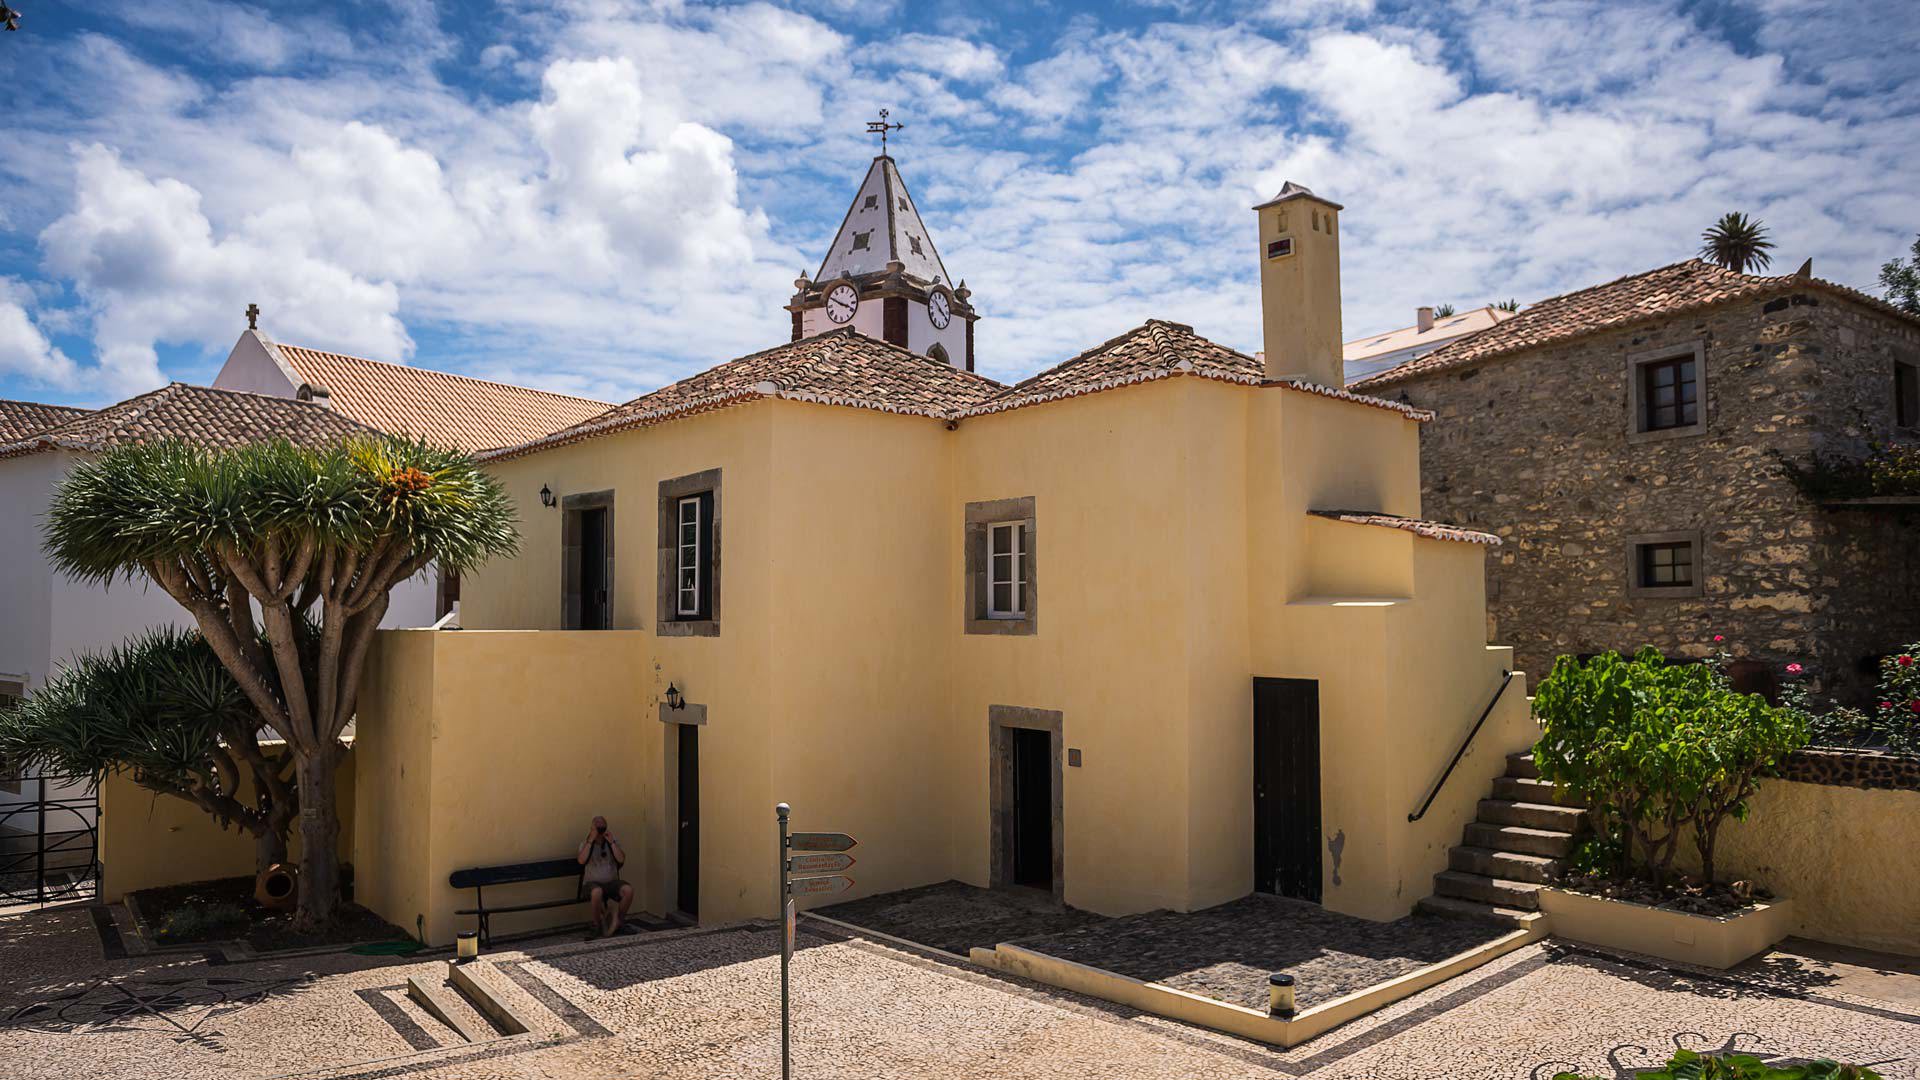 Casa Colombo Museum of Porto Santo 5